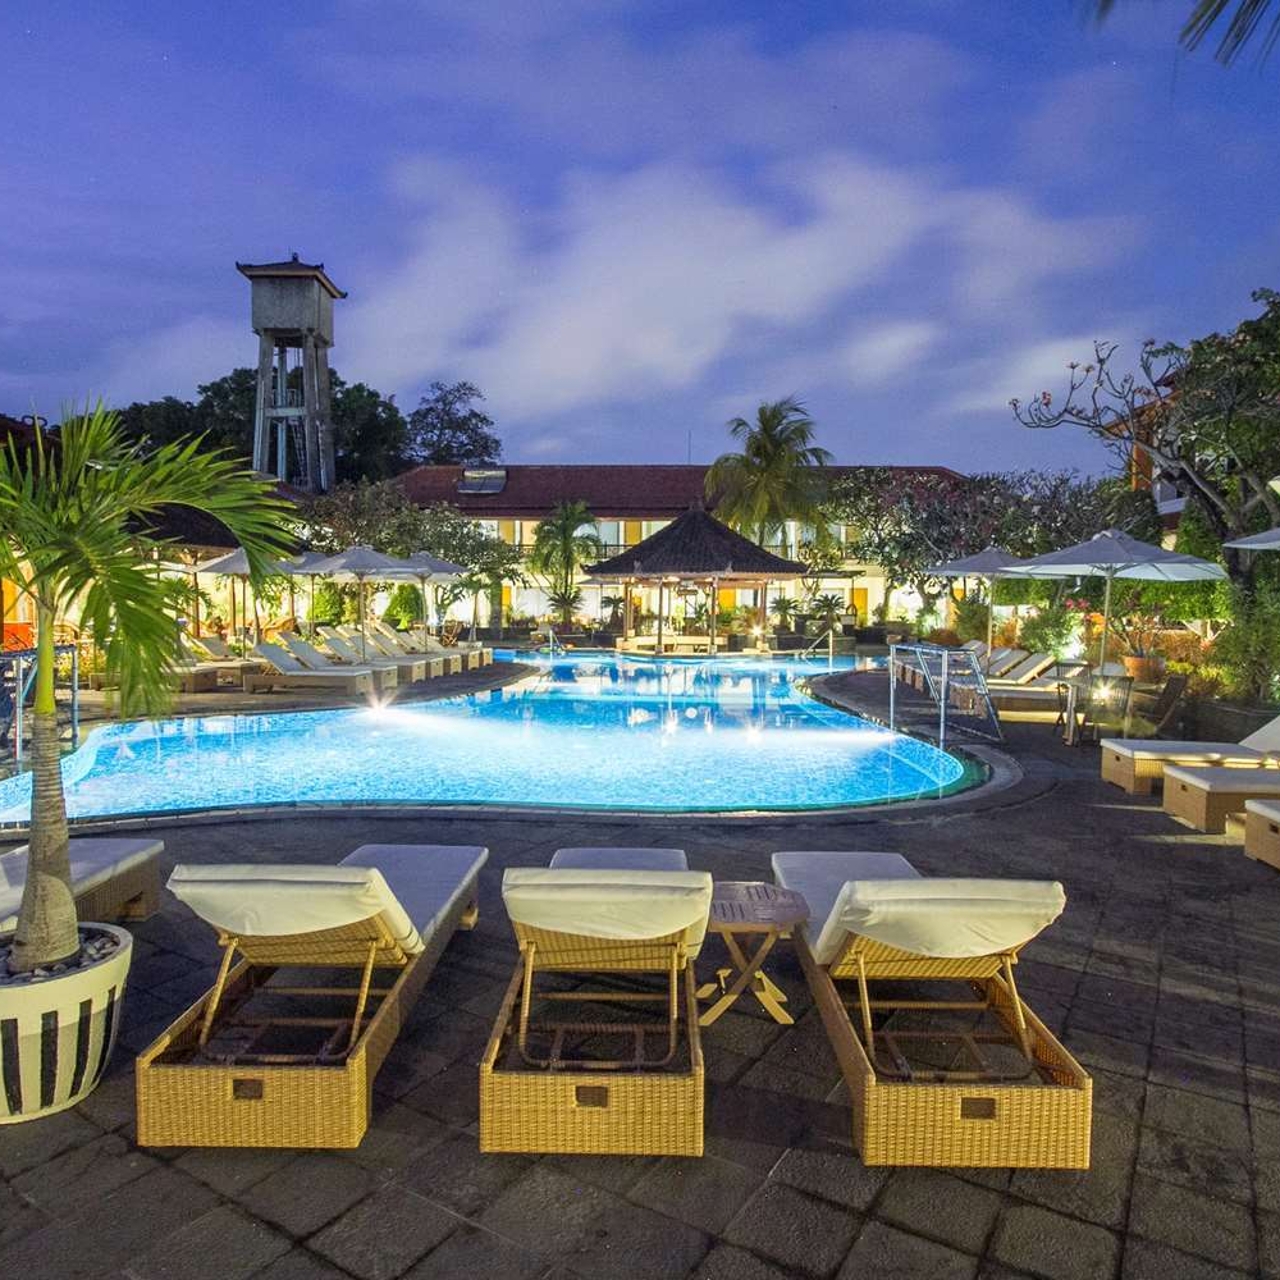 Hotel Sol Kuta Beach Club - 3 HRS star hotel in Kuta (Bali)